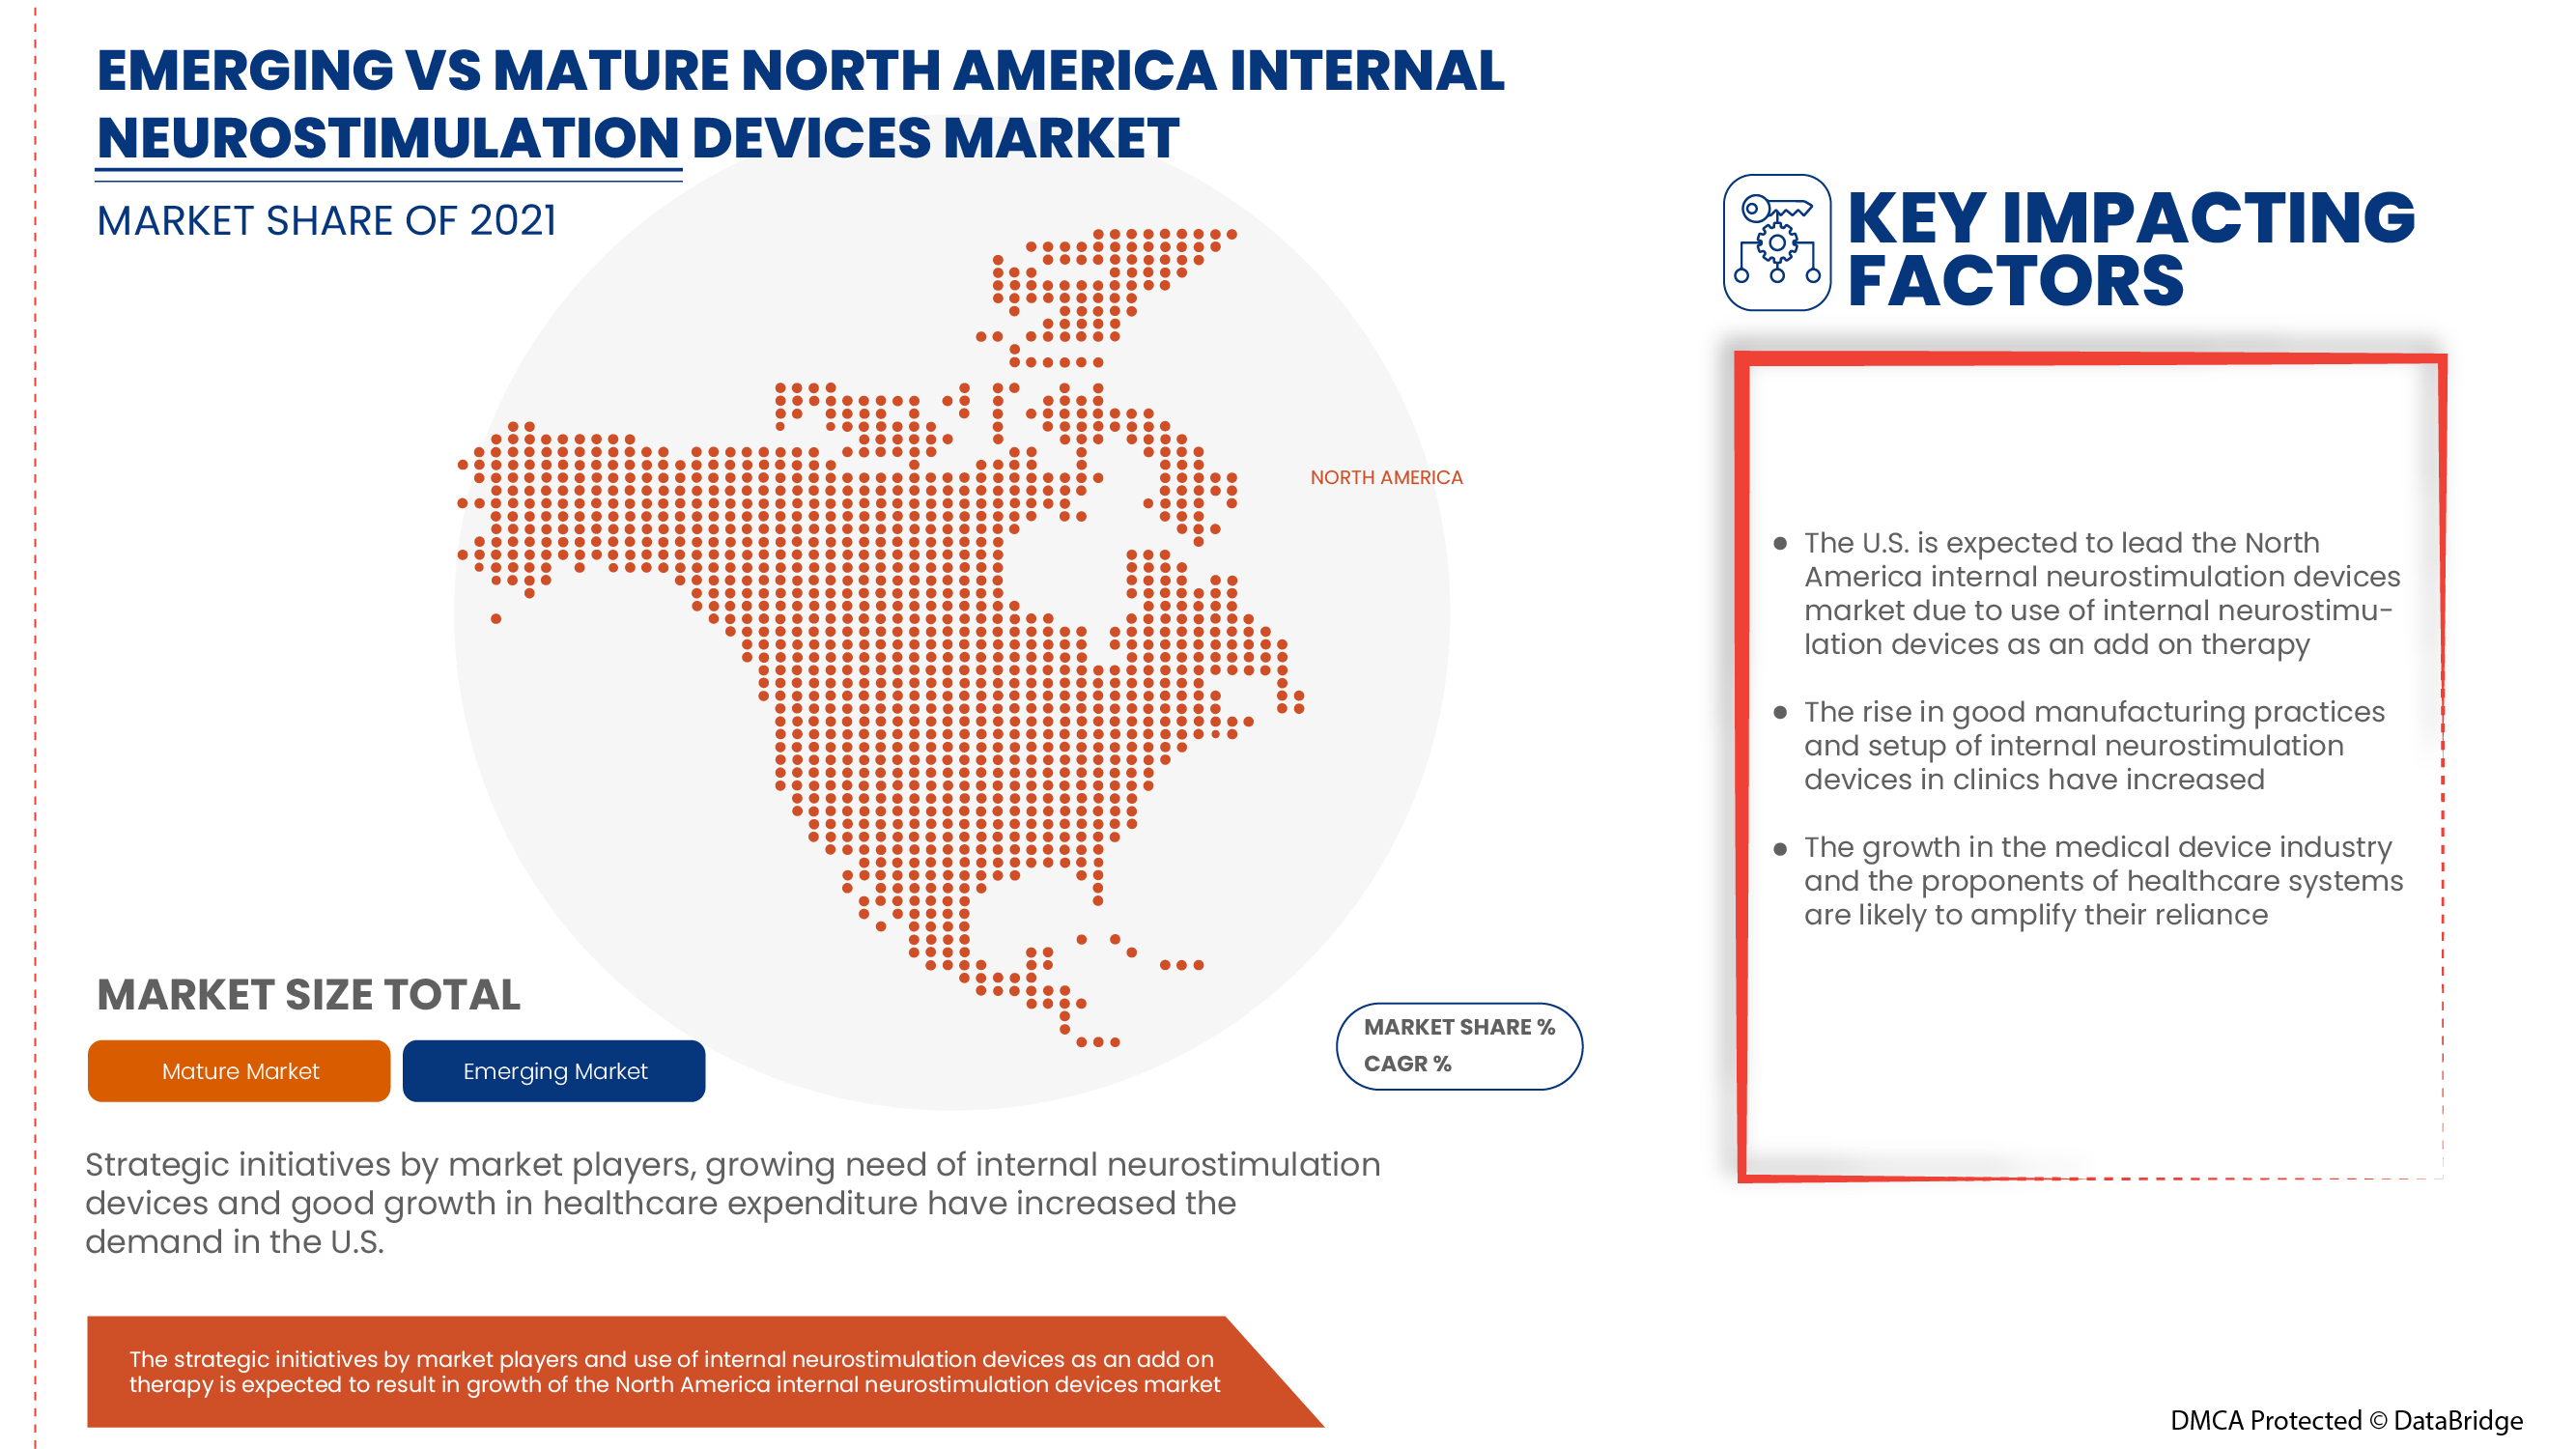 North America Internal Neurostimulation Devices Market